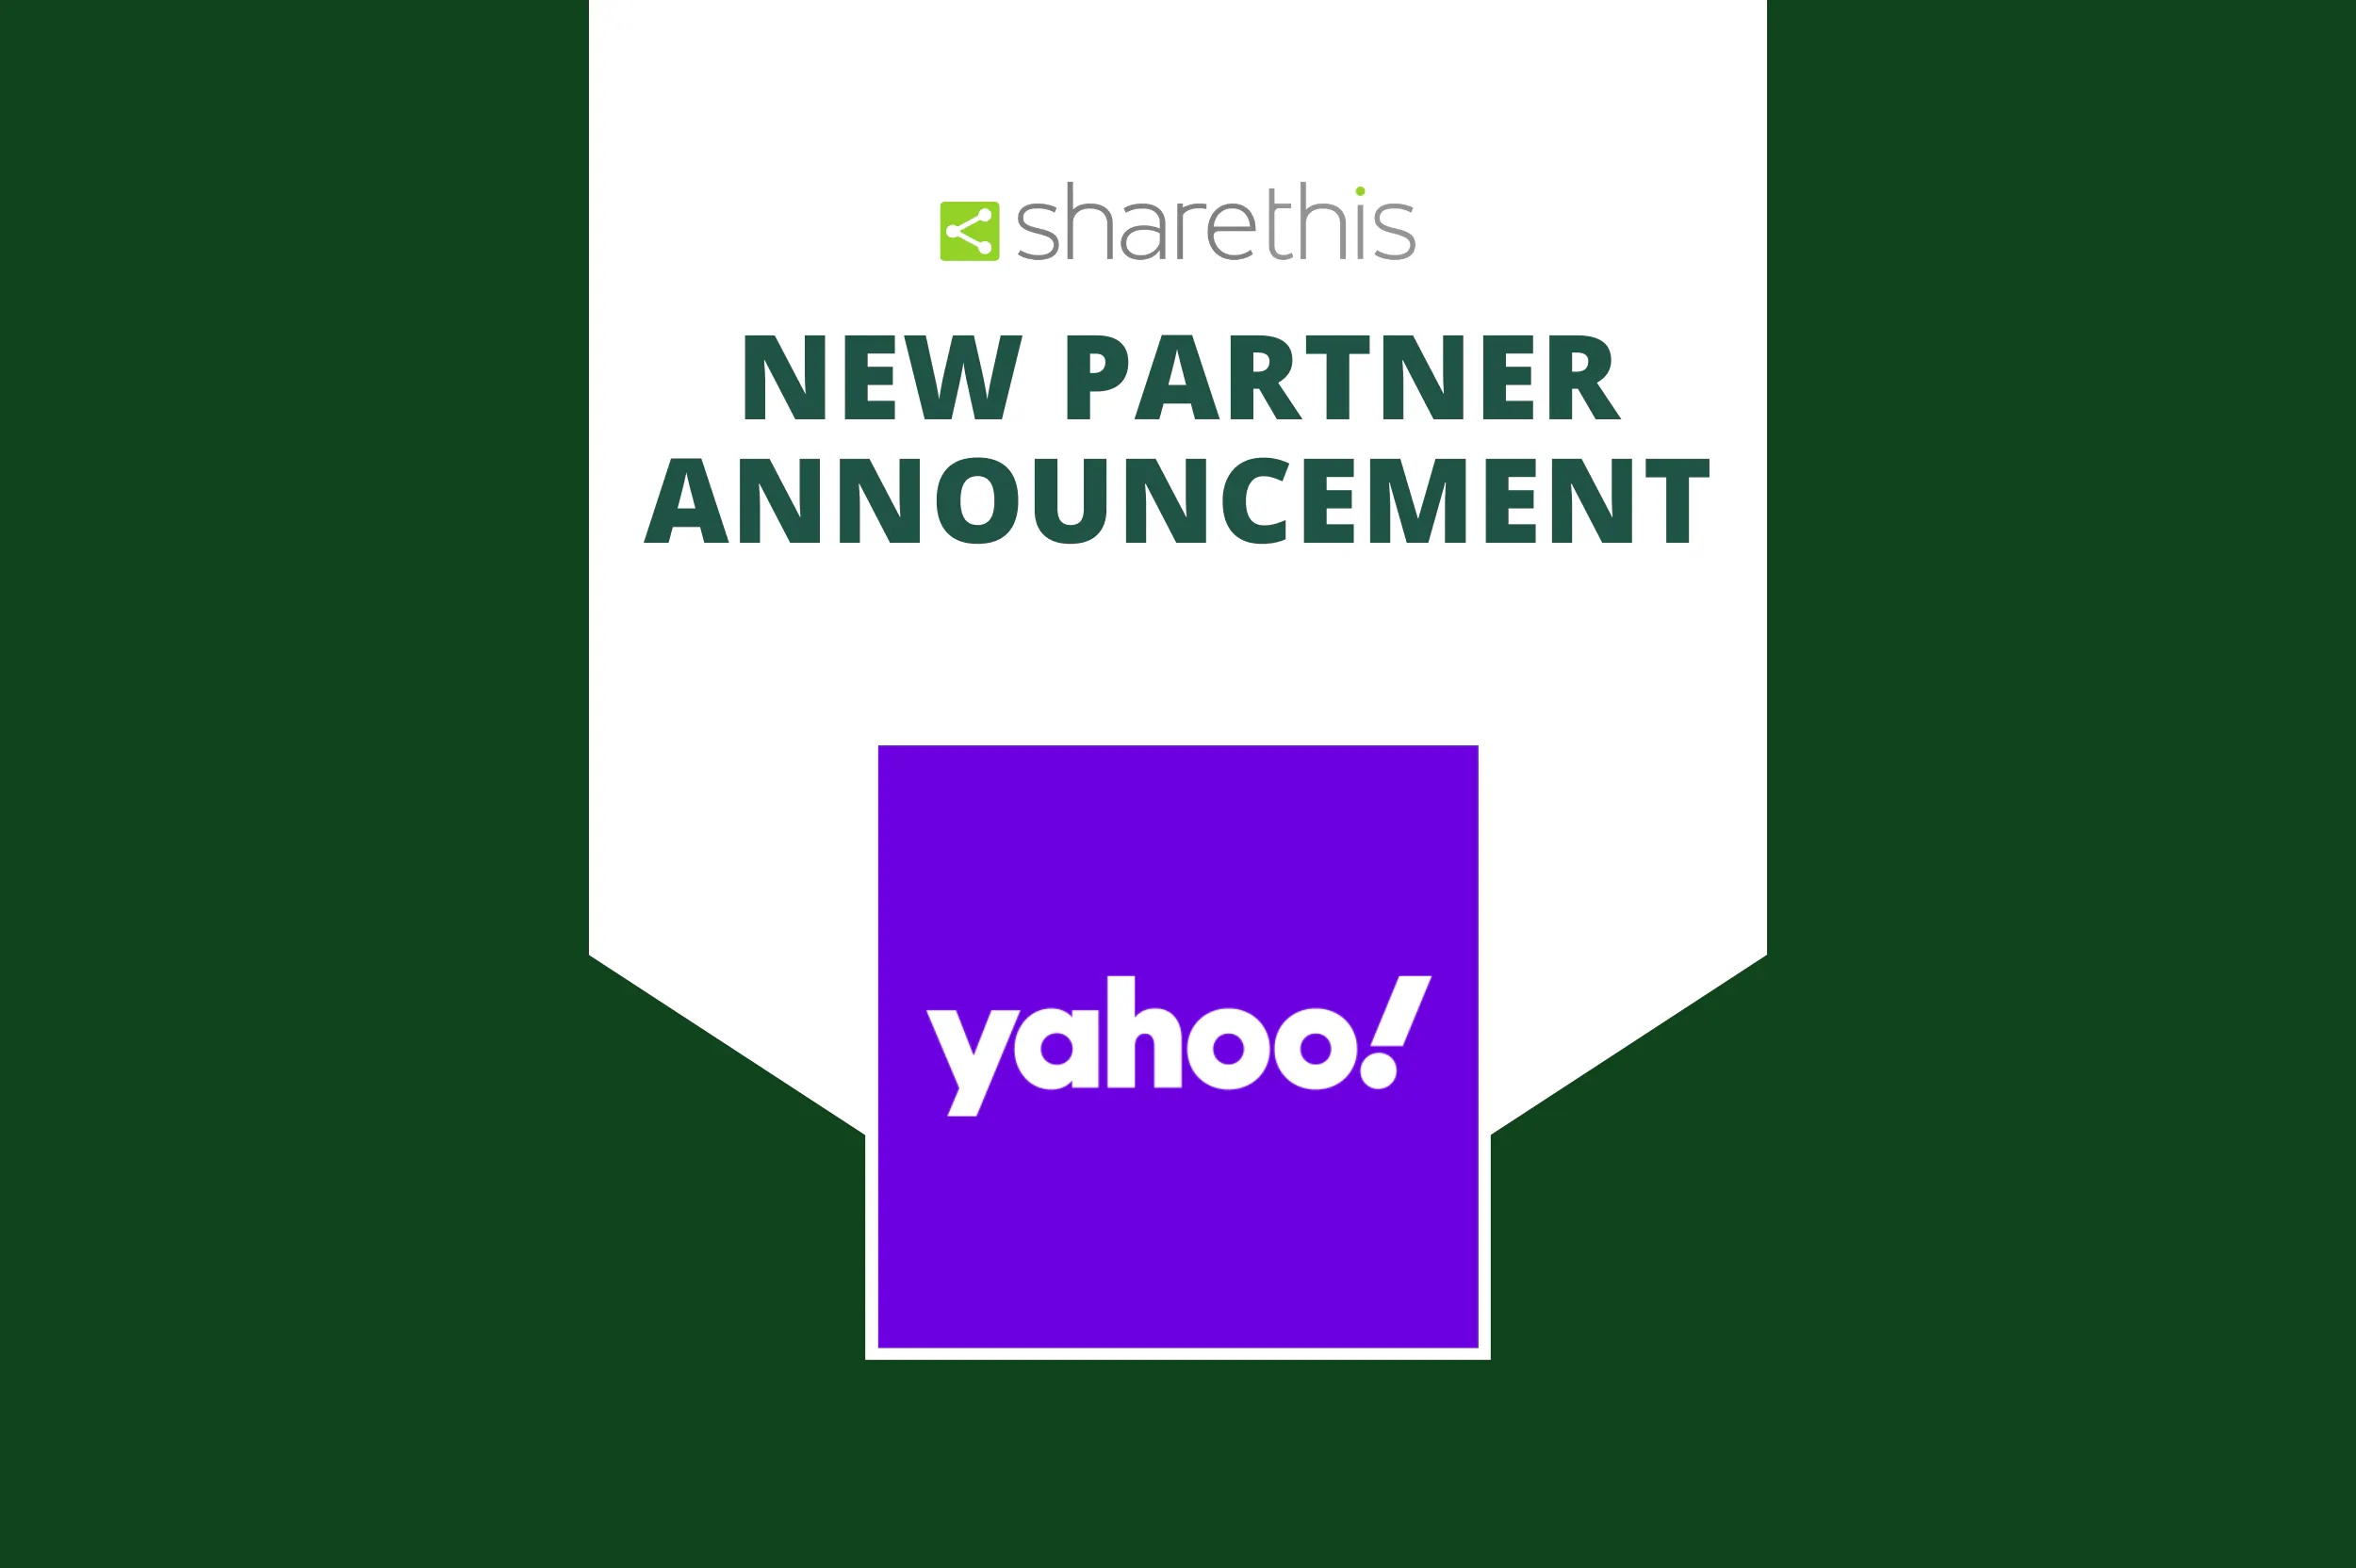 Nuovo annuncio di partnership con Yahoo ConnectID